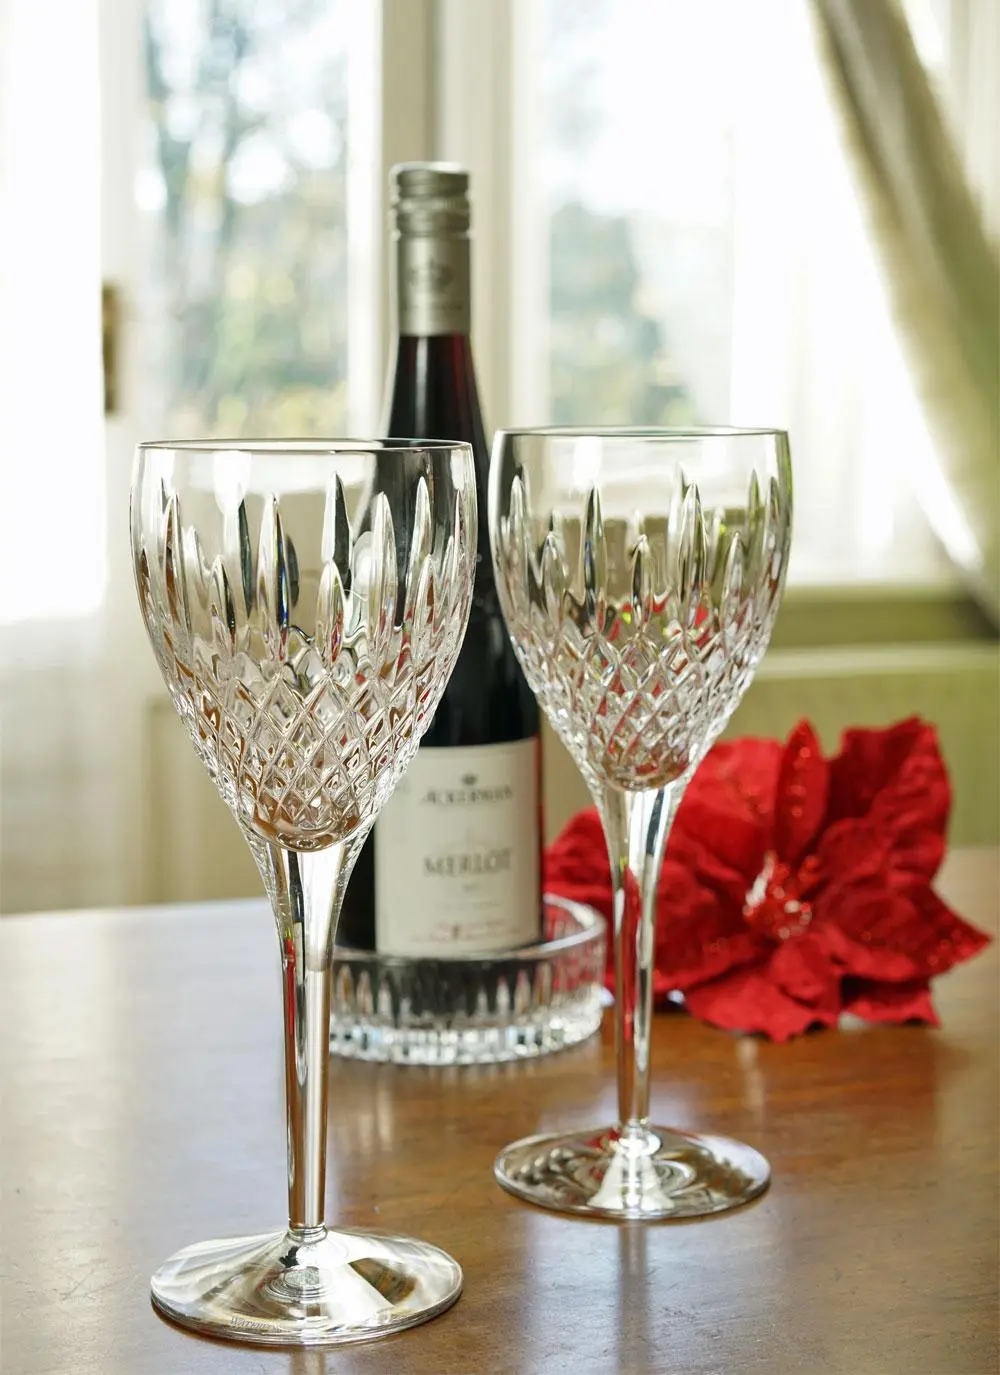 Waterford Crystal Aran White Wine Glasses, Set of 2